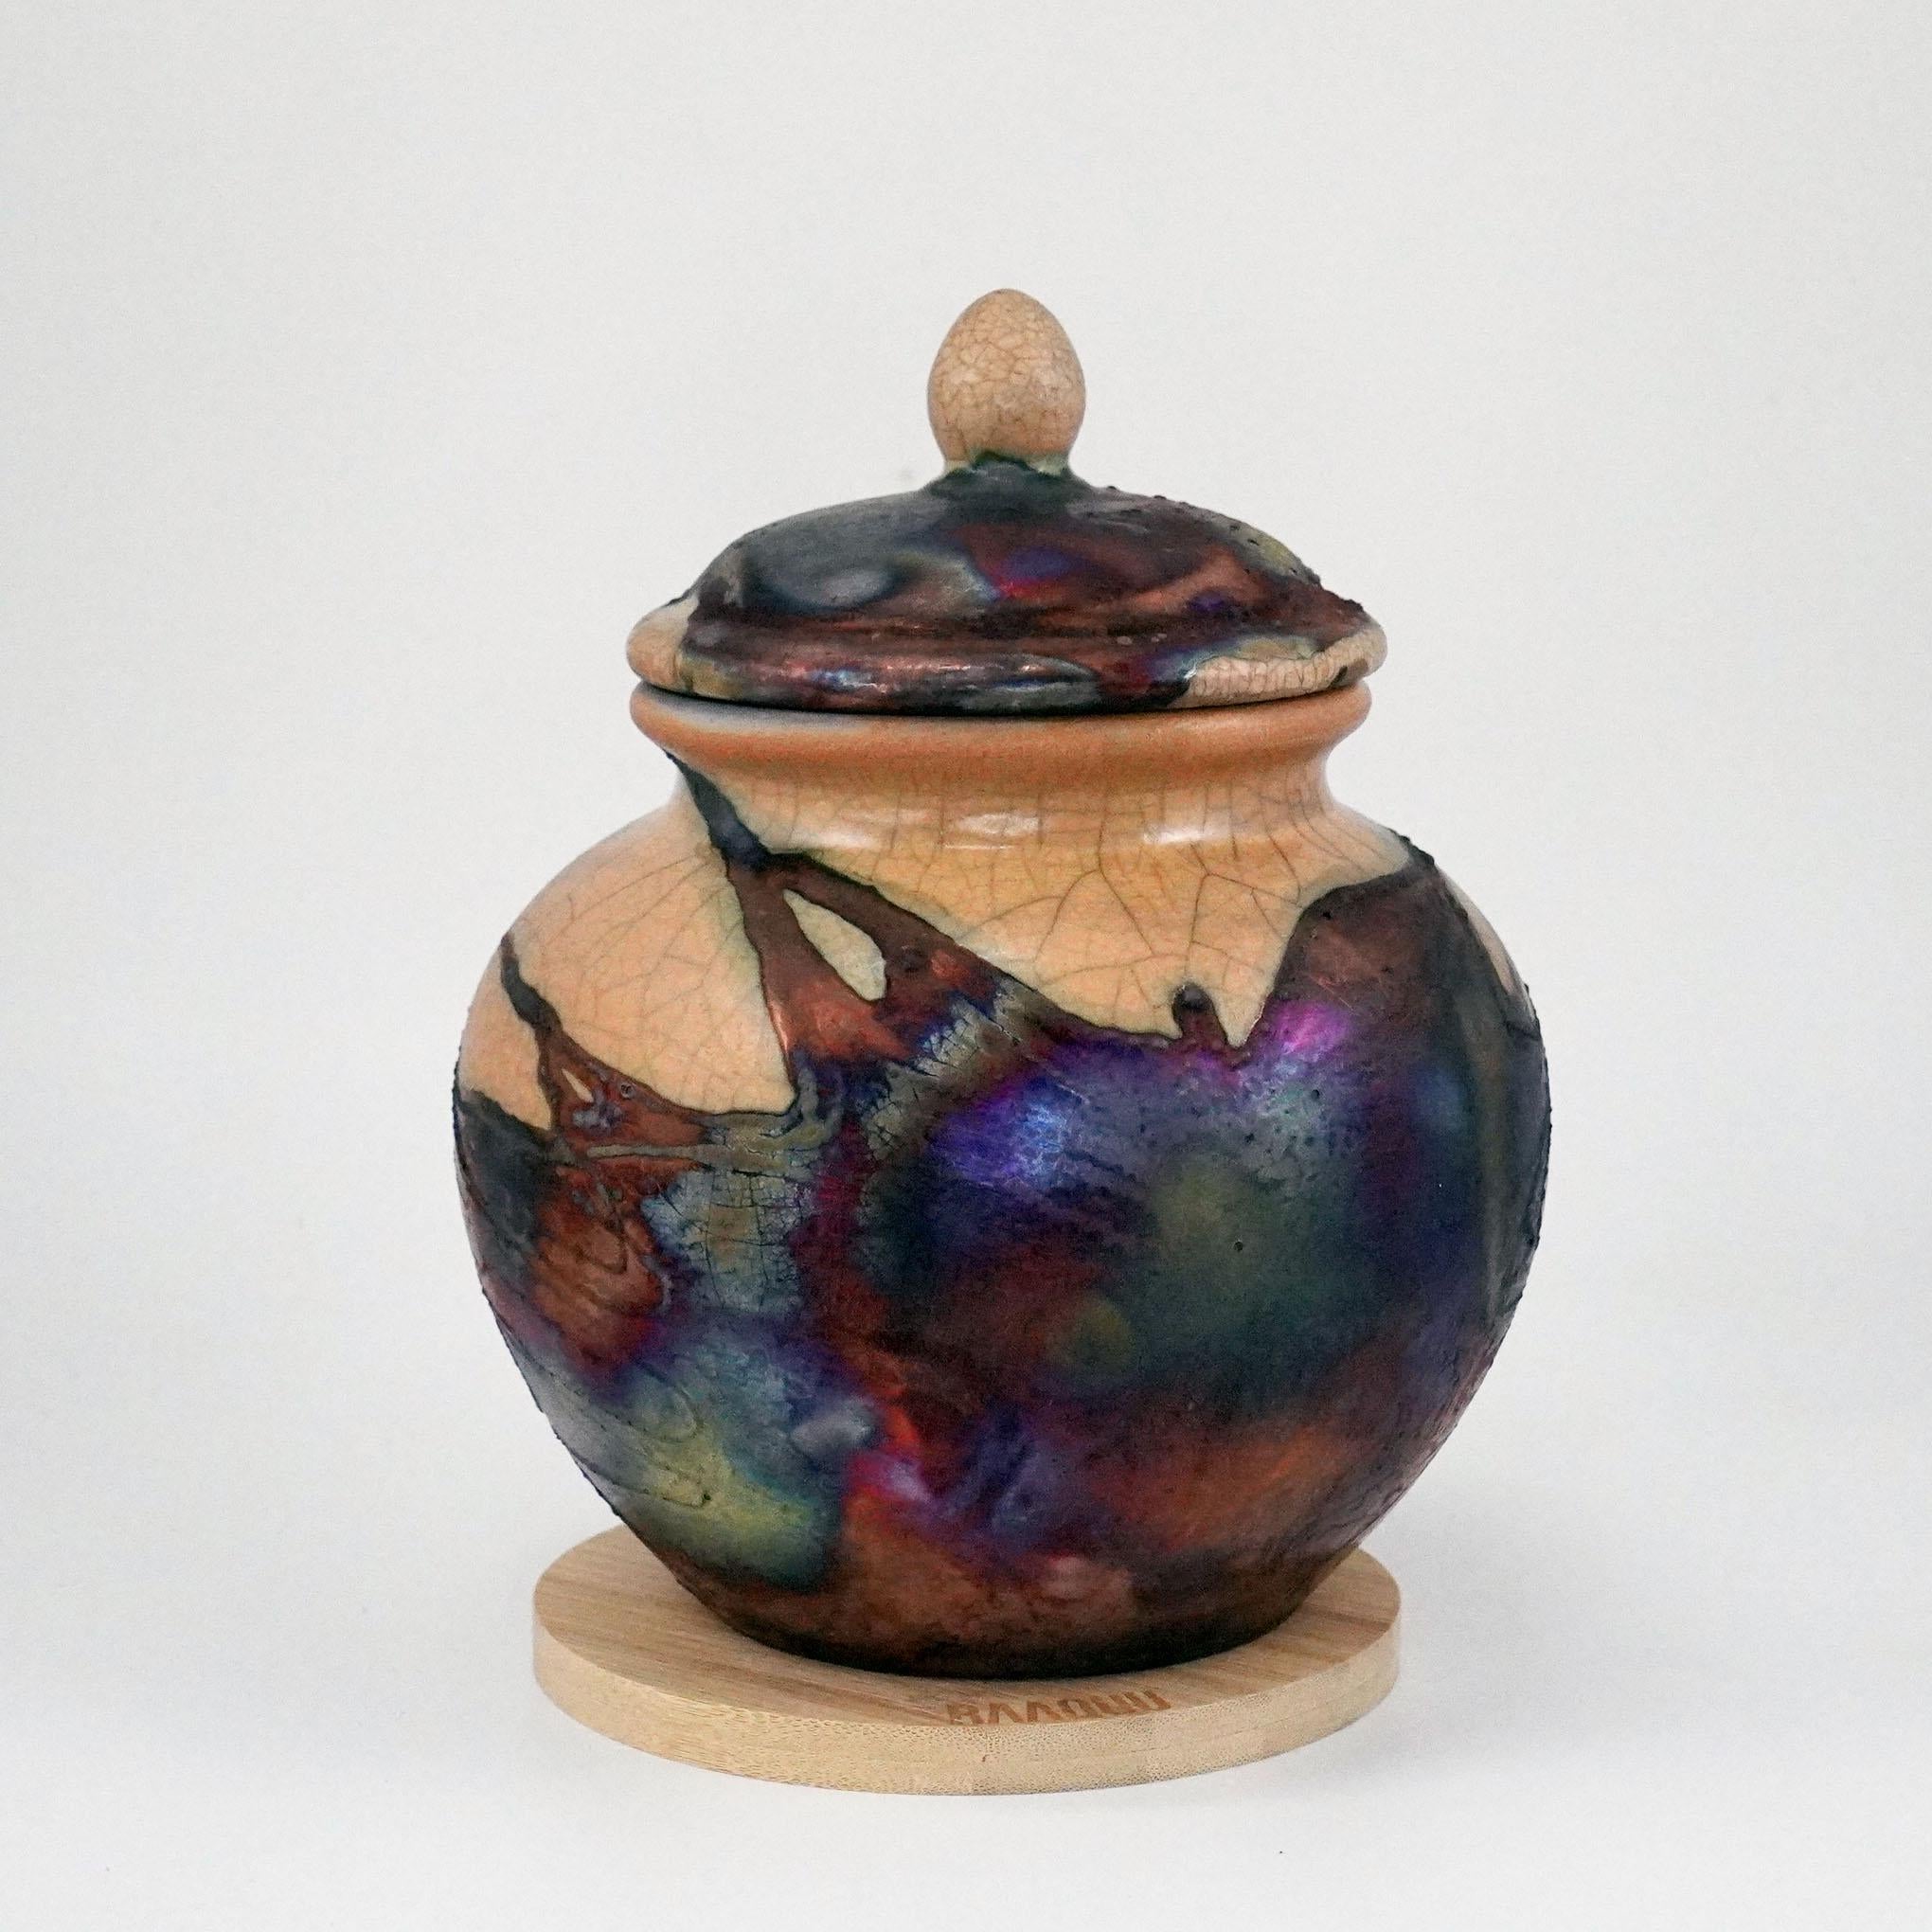 firing raku pottery creates a pattern that is